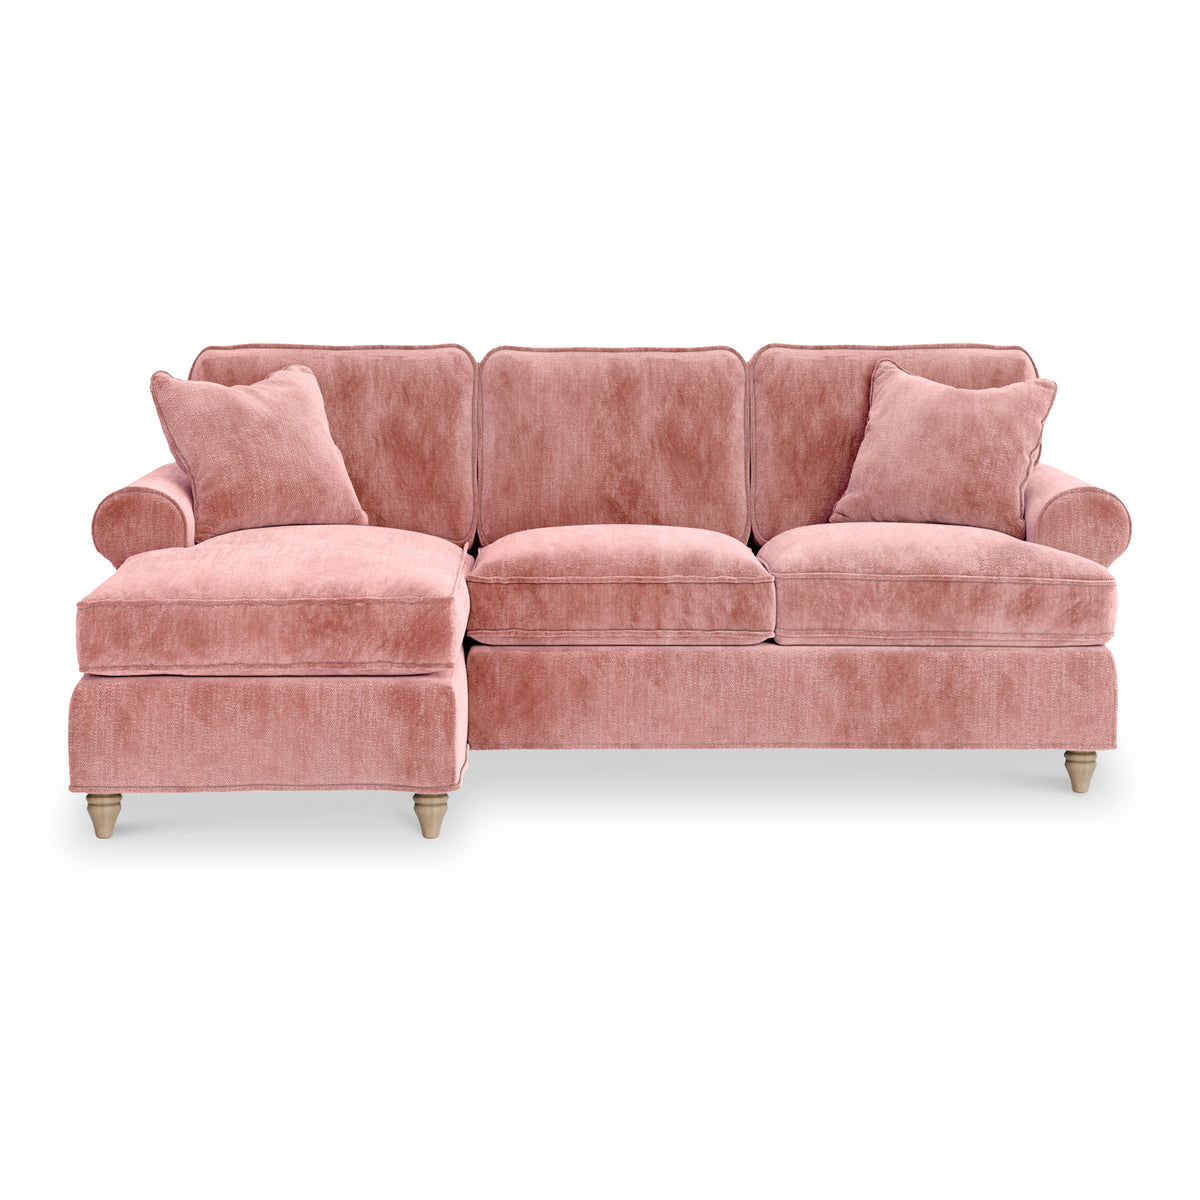 Alfie Chaise Sofa in Plum by Roseland Furniture